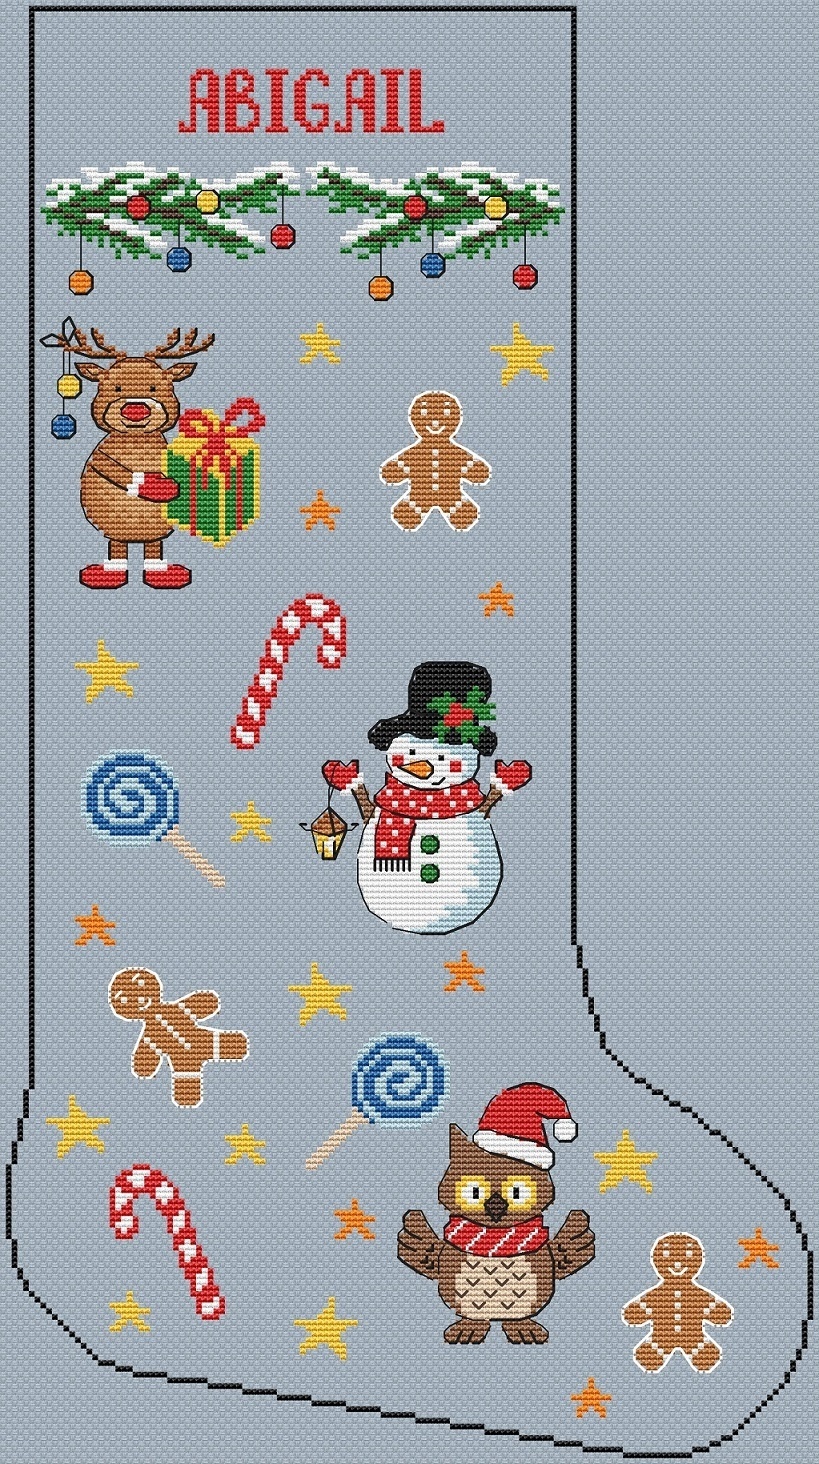 Christmas Stocking. Woodland Cross Stitch Pattern, code AN-178 Anna Nolfina